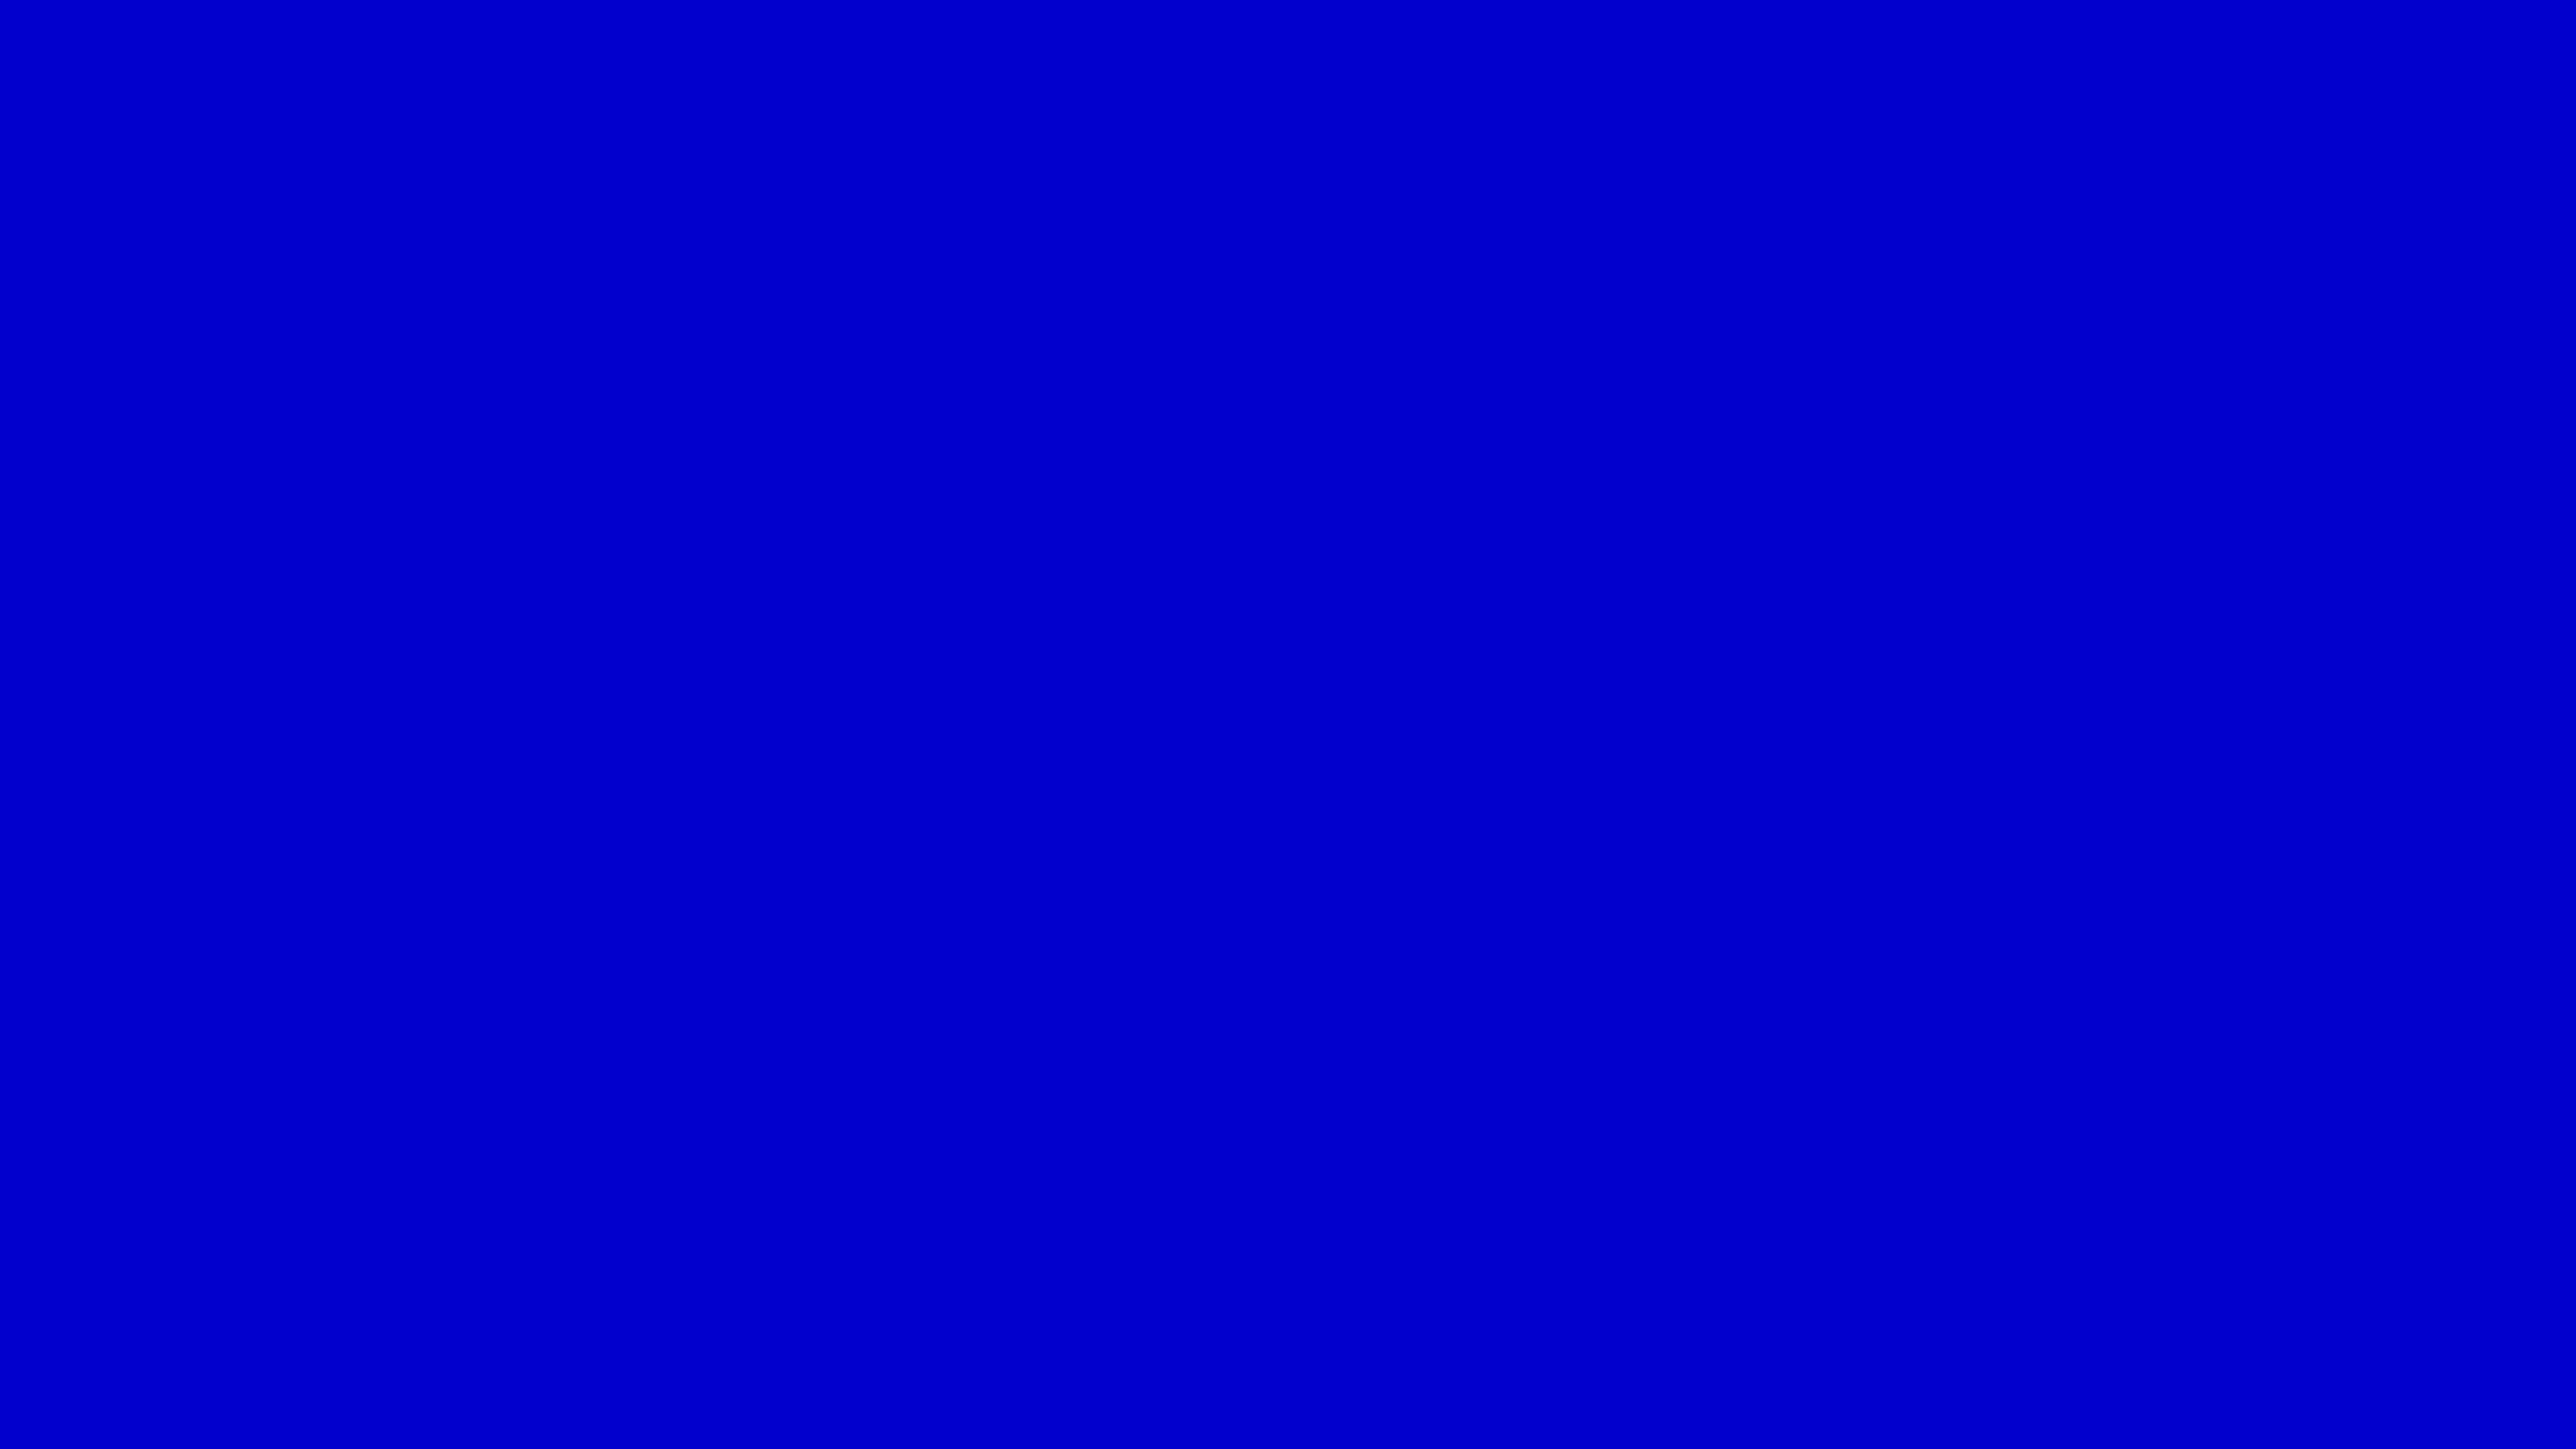 7680x4320 Medium Blue Solid Color Background